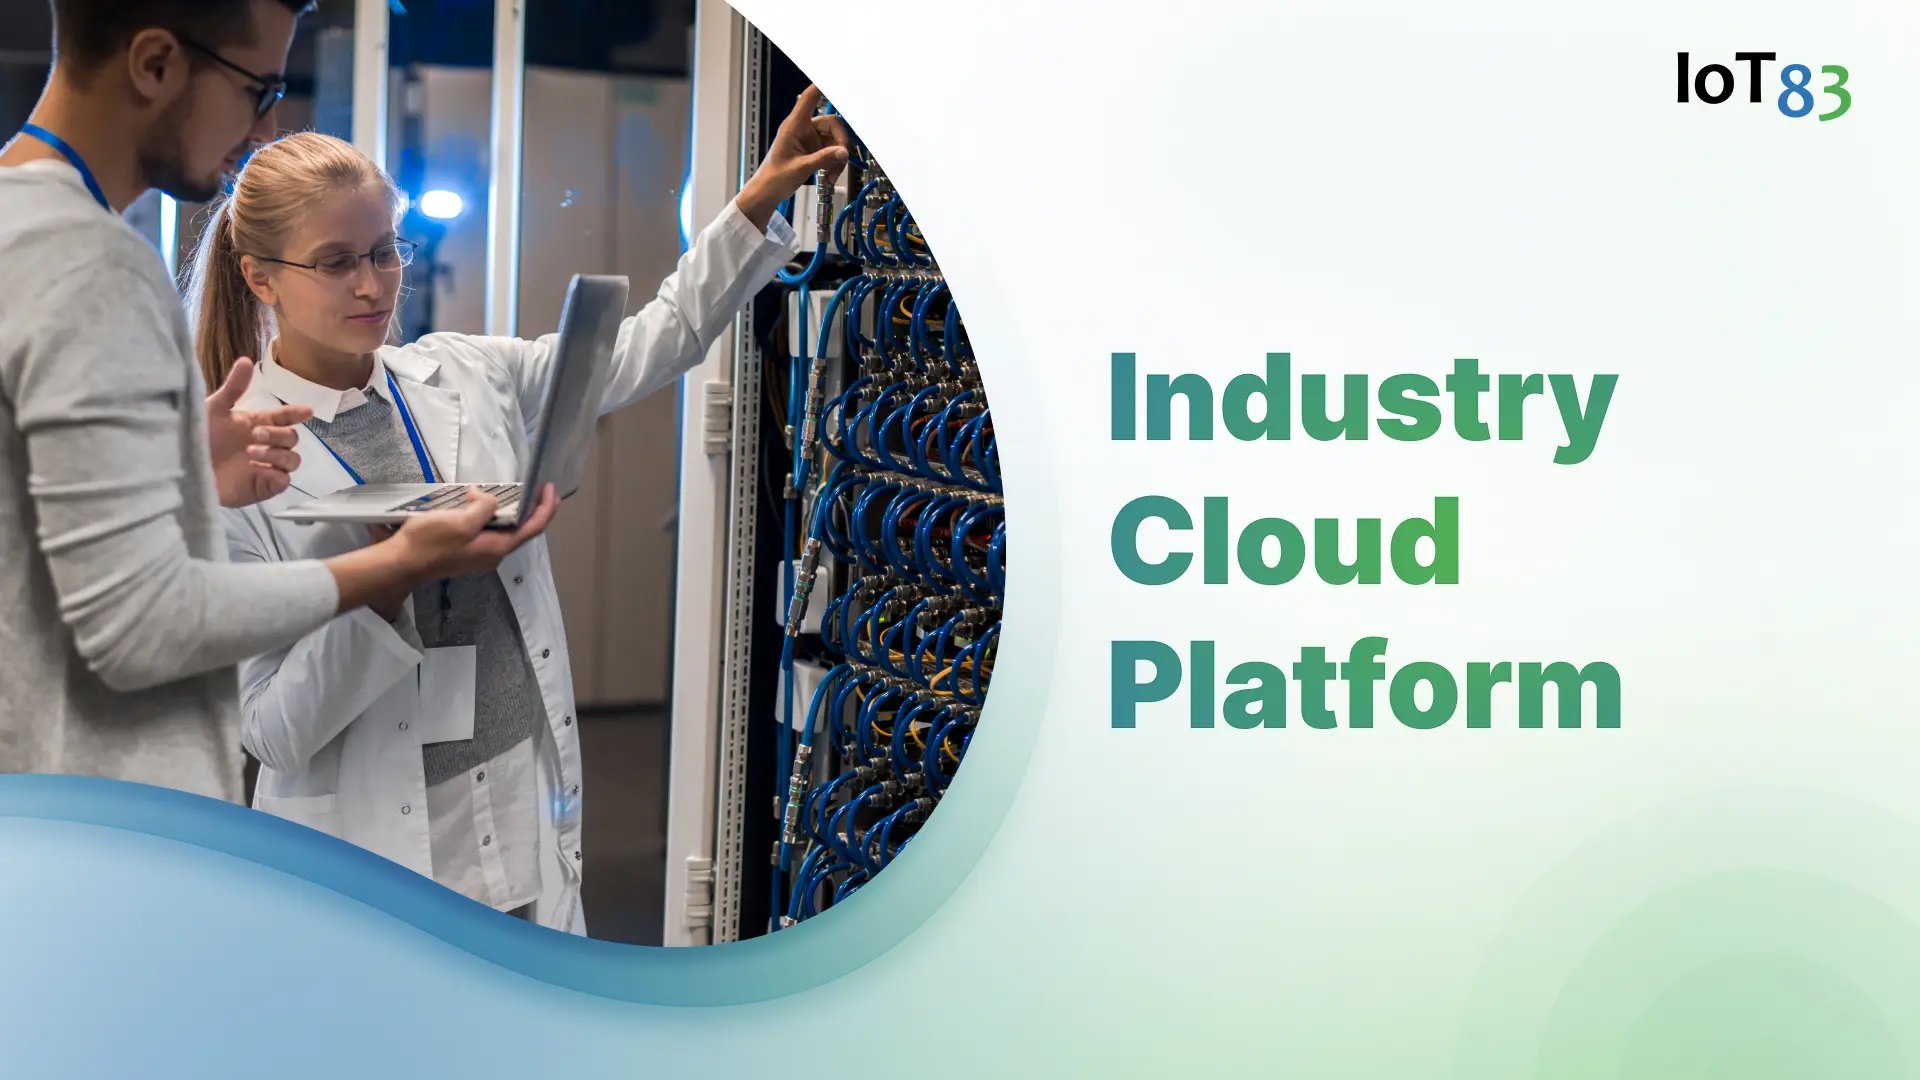 Industry cloud platform